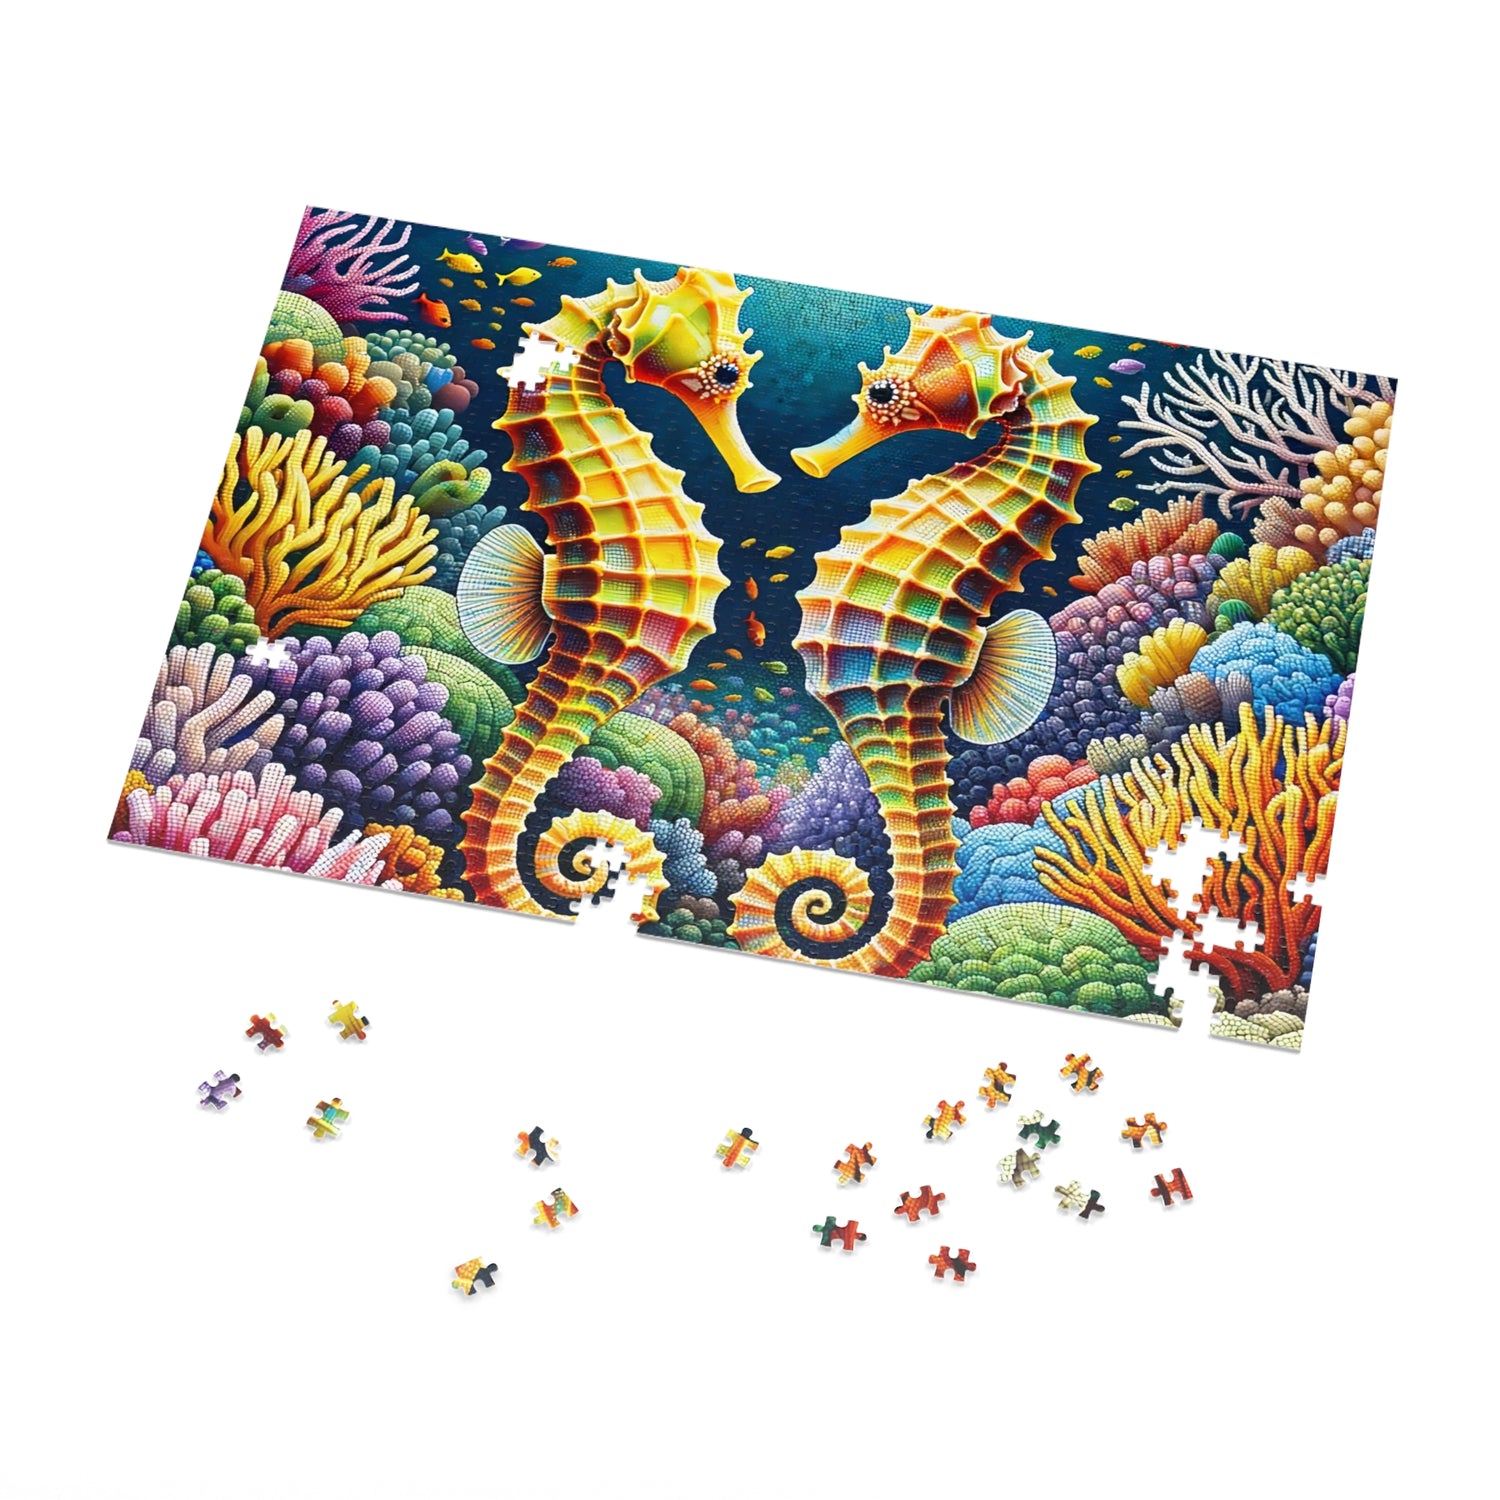 Seahorses, Puzzle, Mosiac, Unique, Jigsaw, Family, Adults (110, 252, 500,1000-Piece)